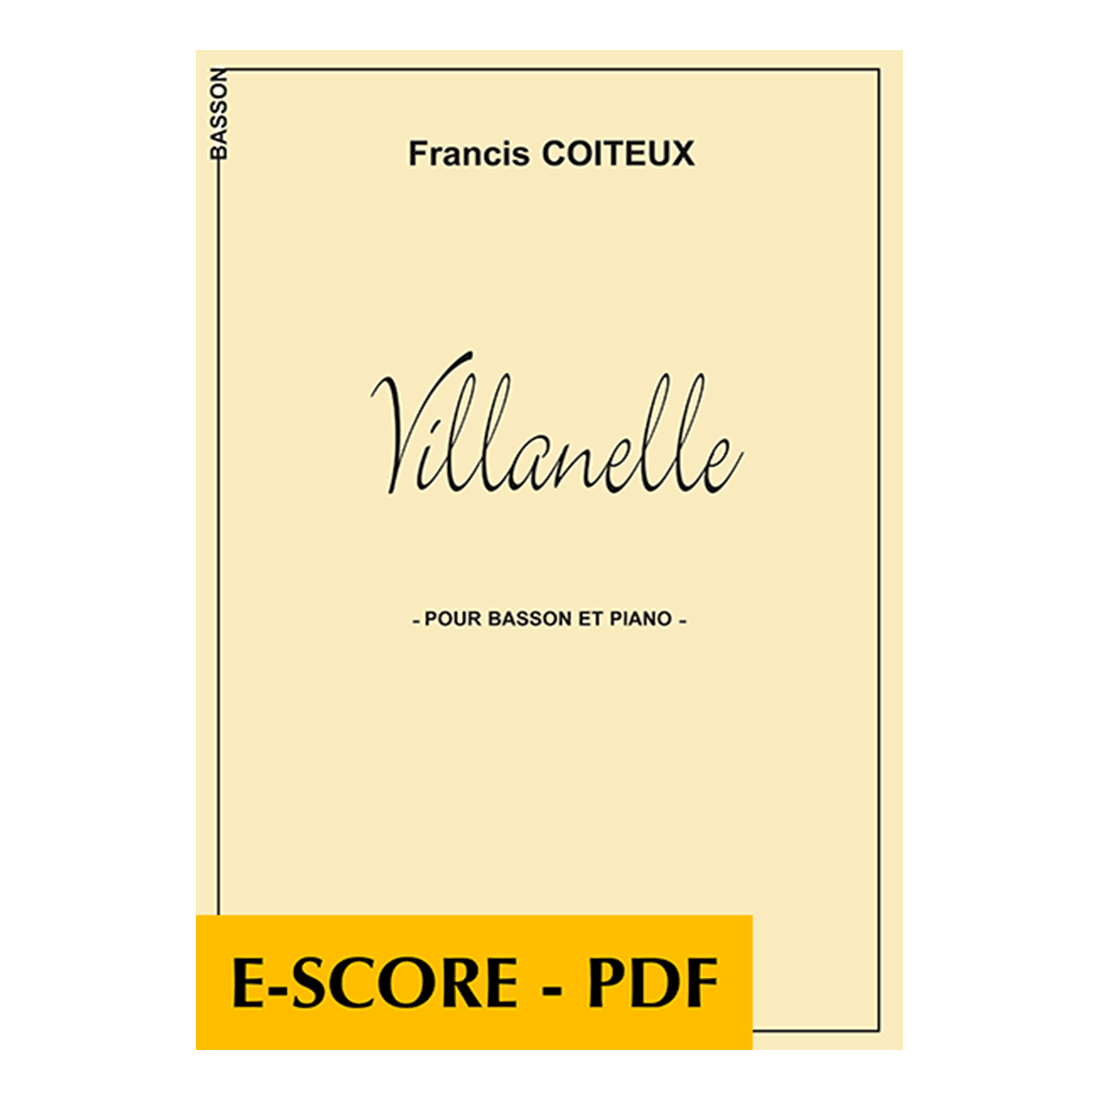 Villanelle für Fagott and Klavier - E-score PDF